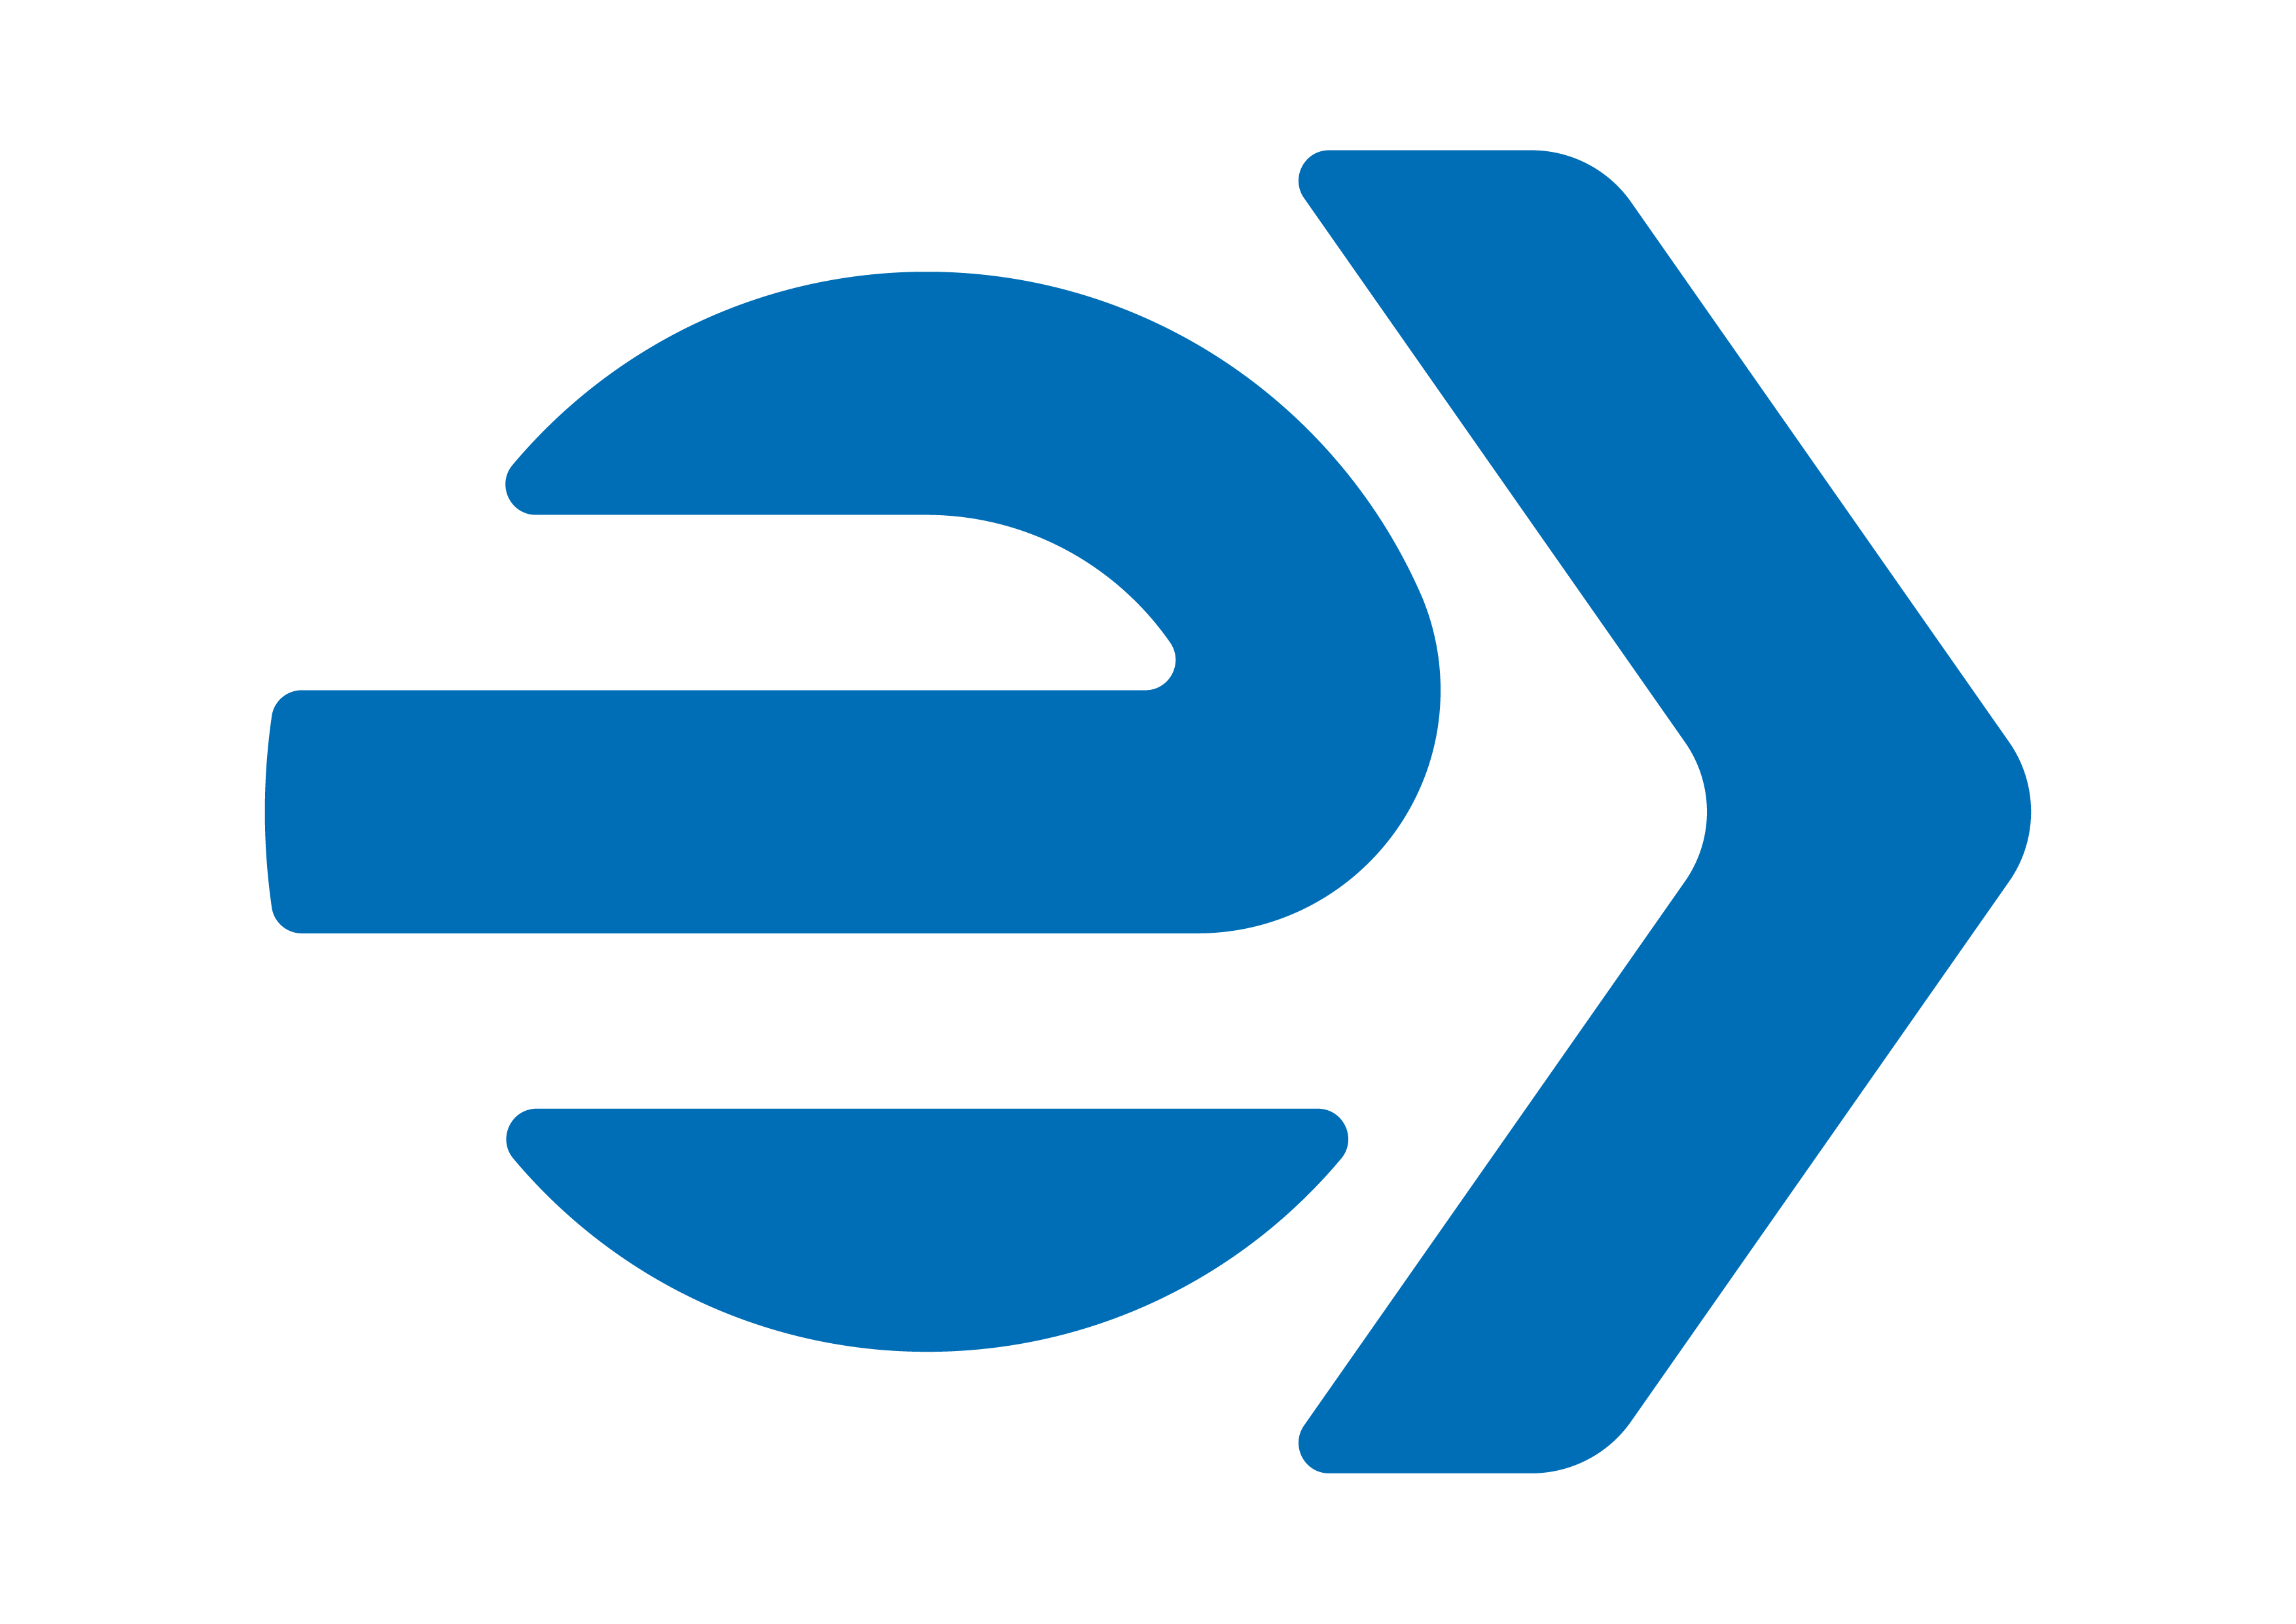 renfe logo